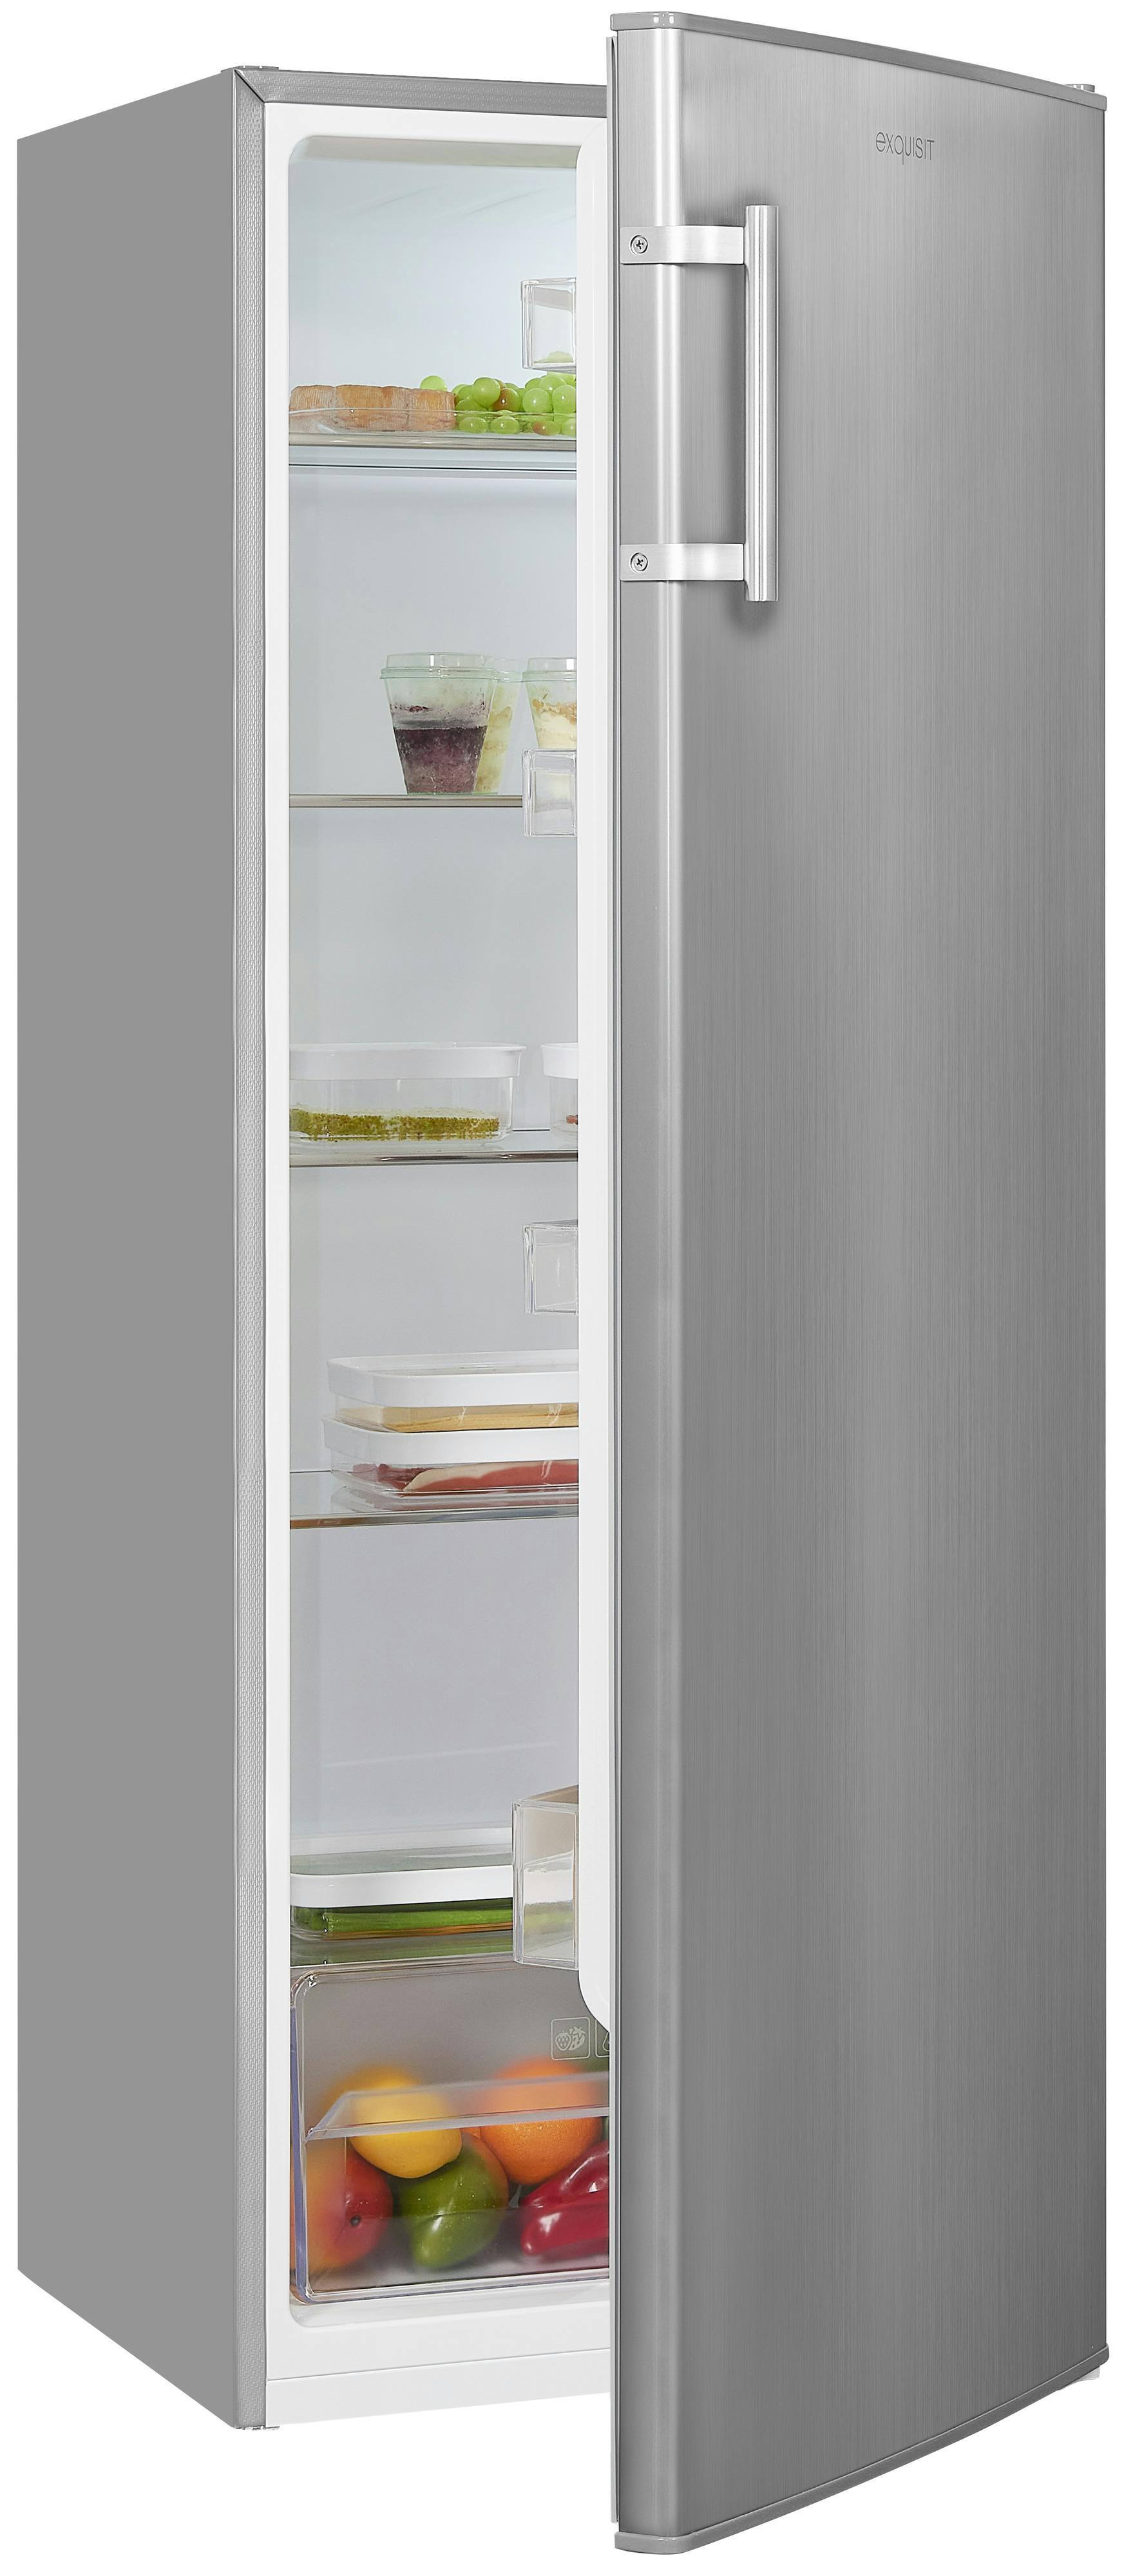 Exquisit Vollraumkühlschrank KS320-V-H-040E inoxlook | 242 l Nutzinhalt |  Edelstahloptik | METRO Marktplatz